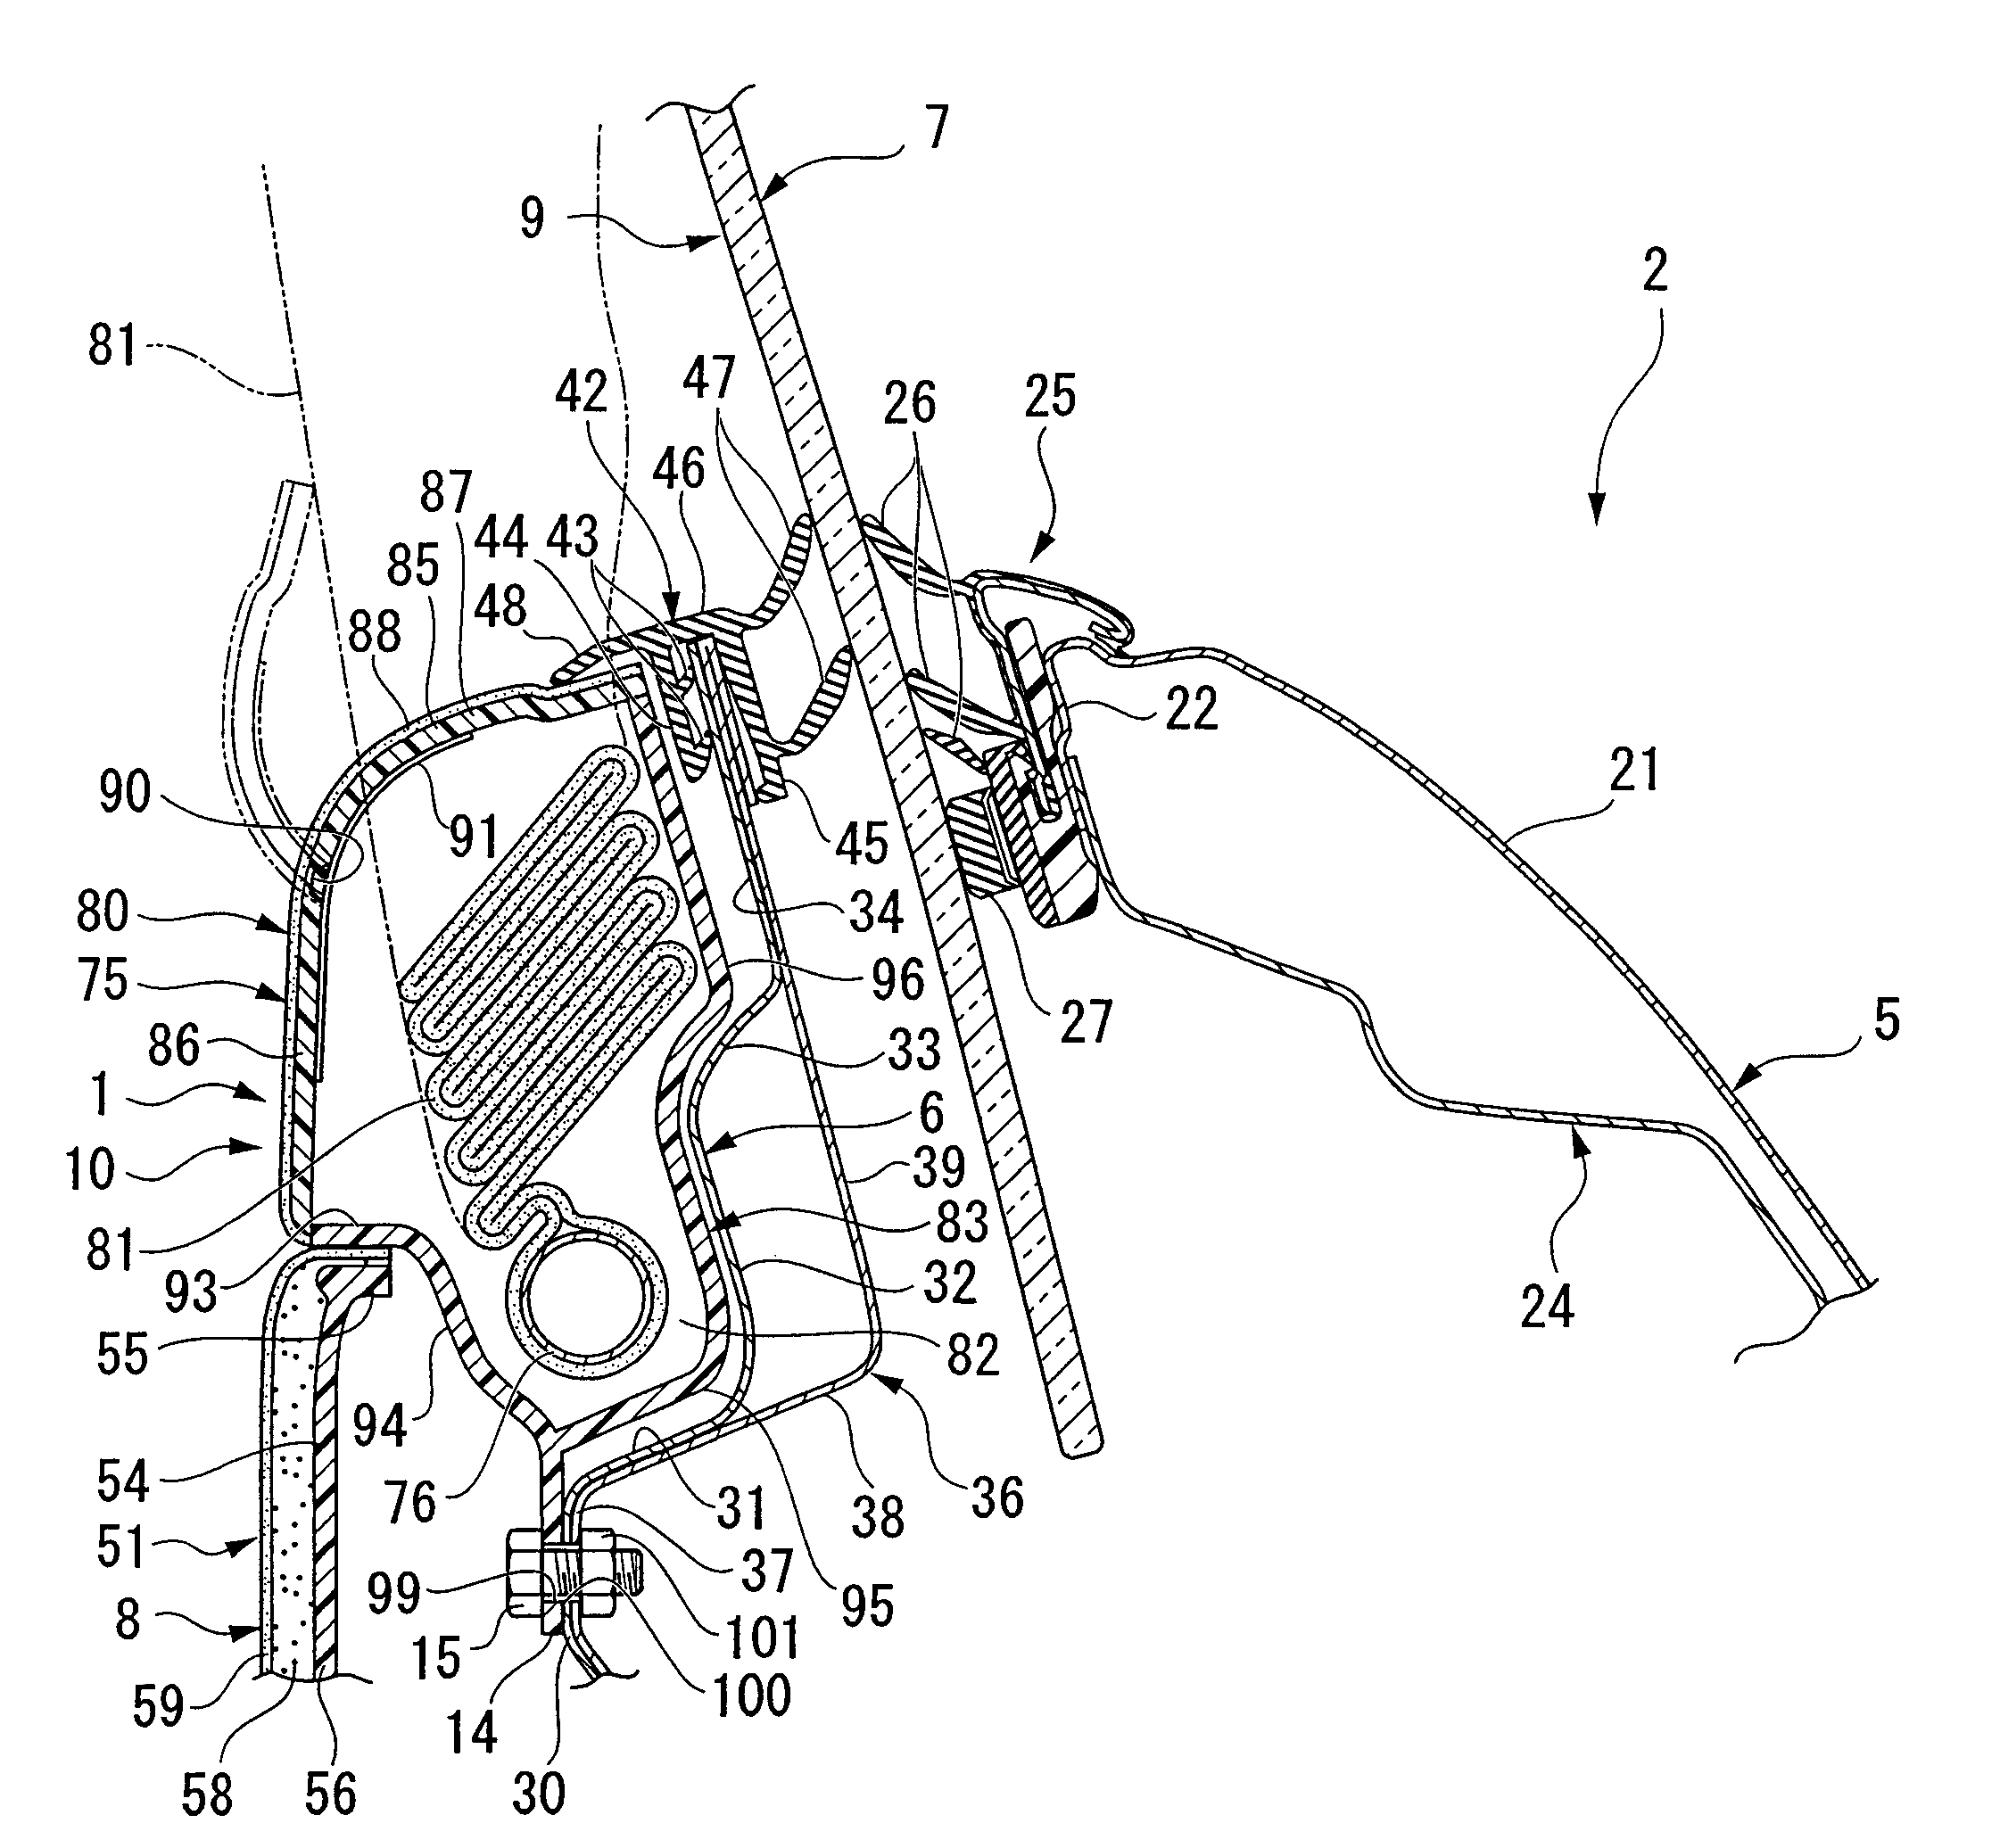 Arrangement structure of air bag device